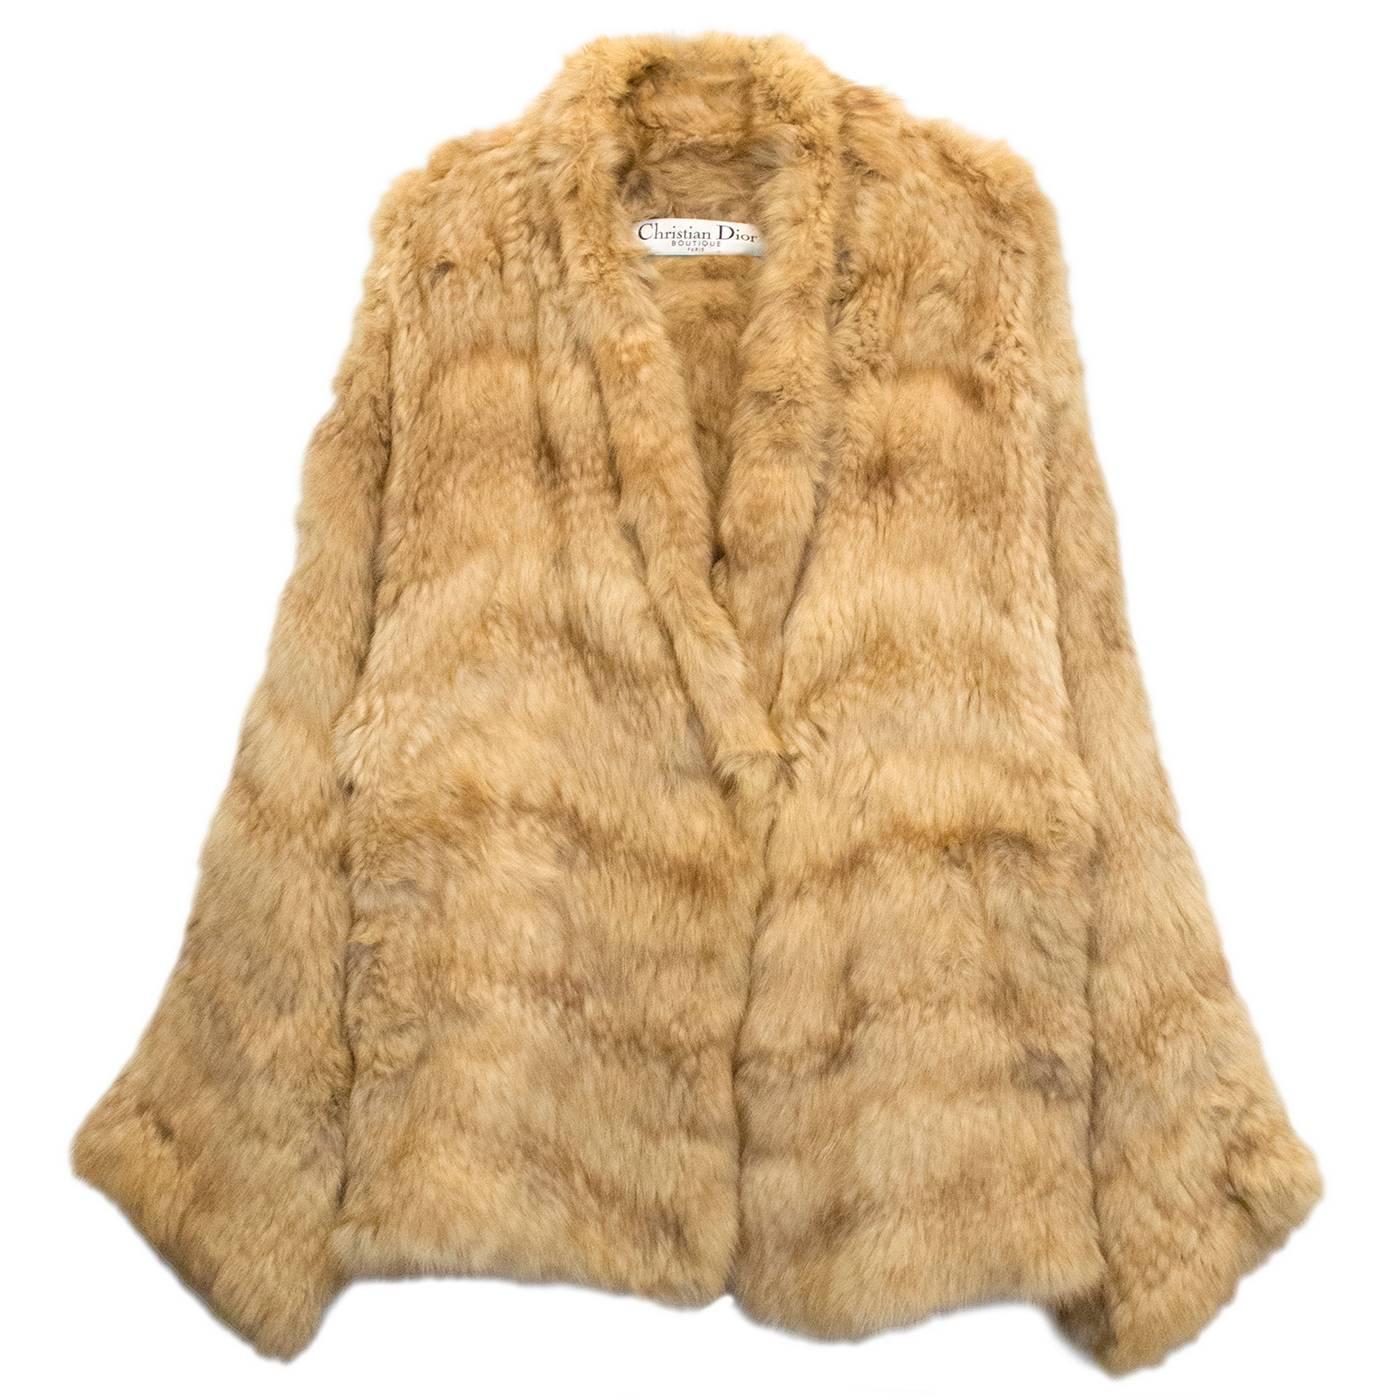 Christian Dior Rare Russian Sable Fur Coat